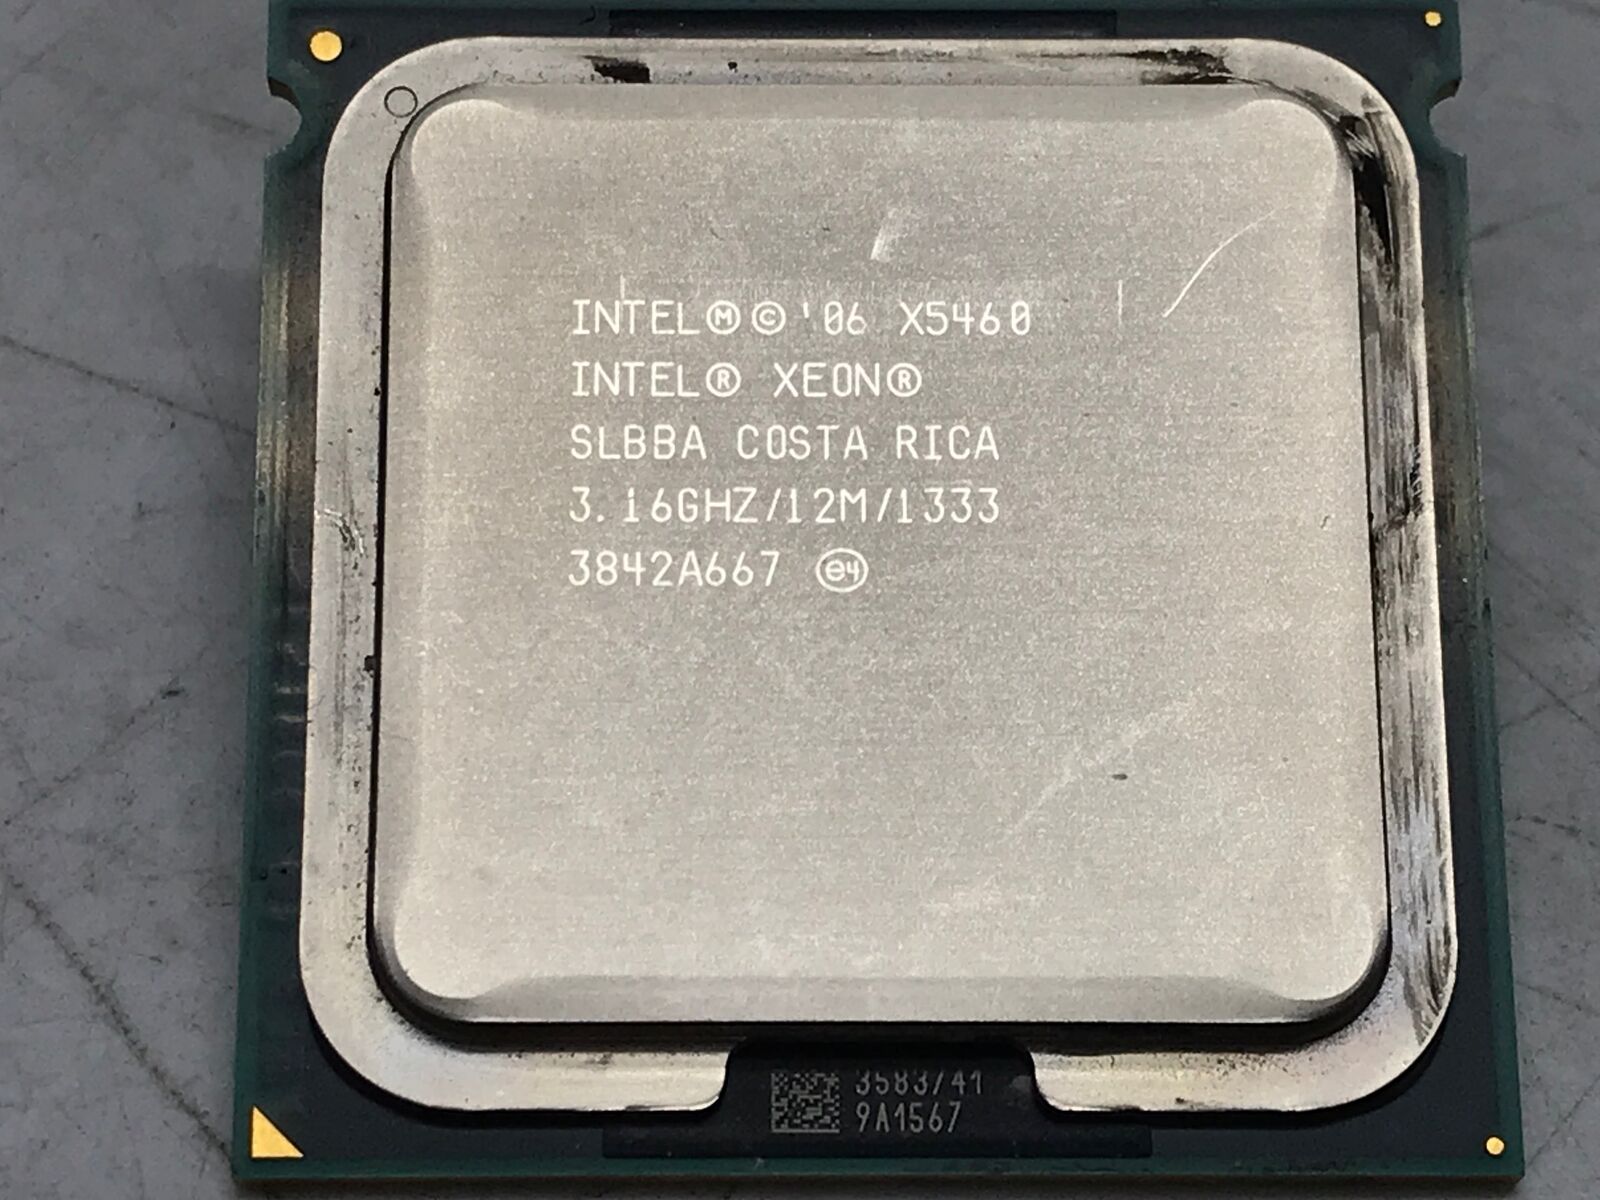 Intel Xeon X5460 3.16GHz Quad-Core LGA 771 12MB 1333 CPU Processor SLBBA